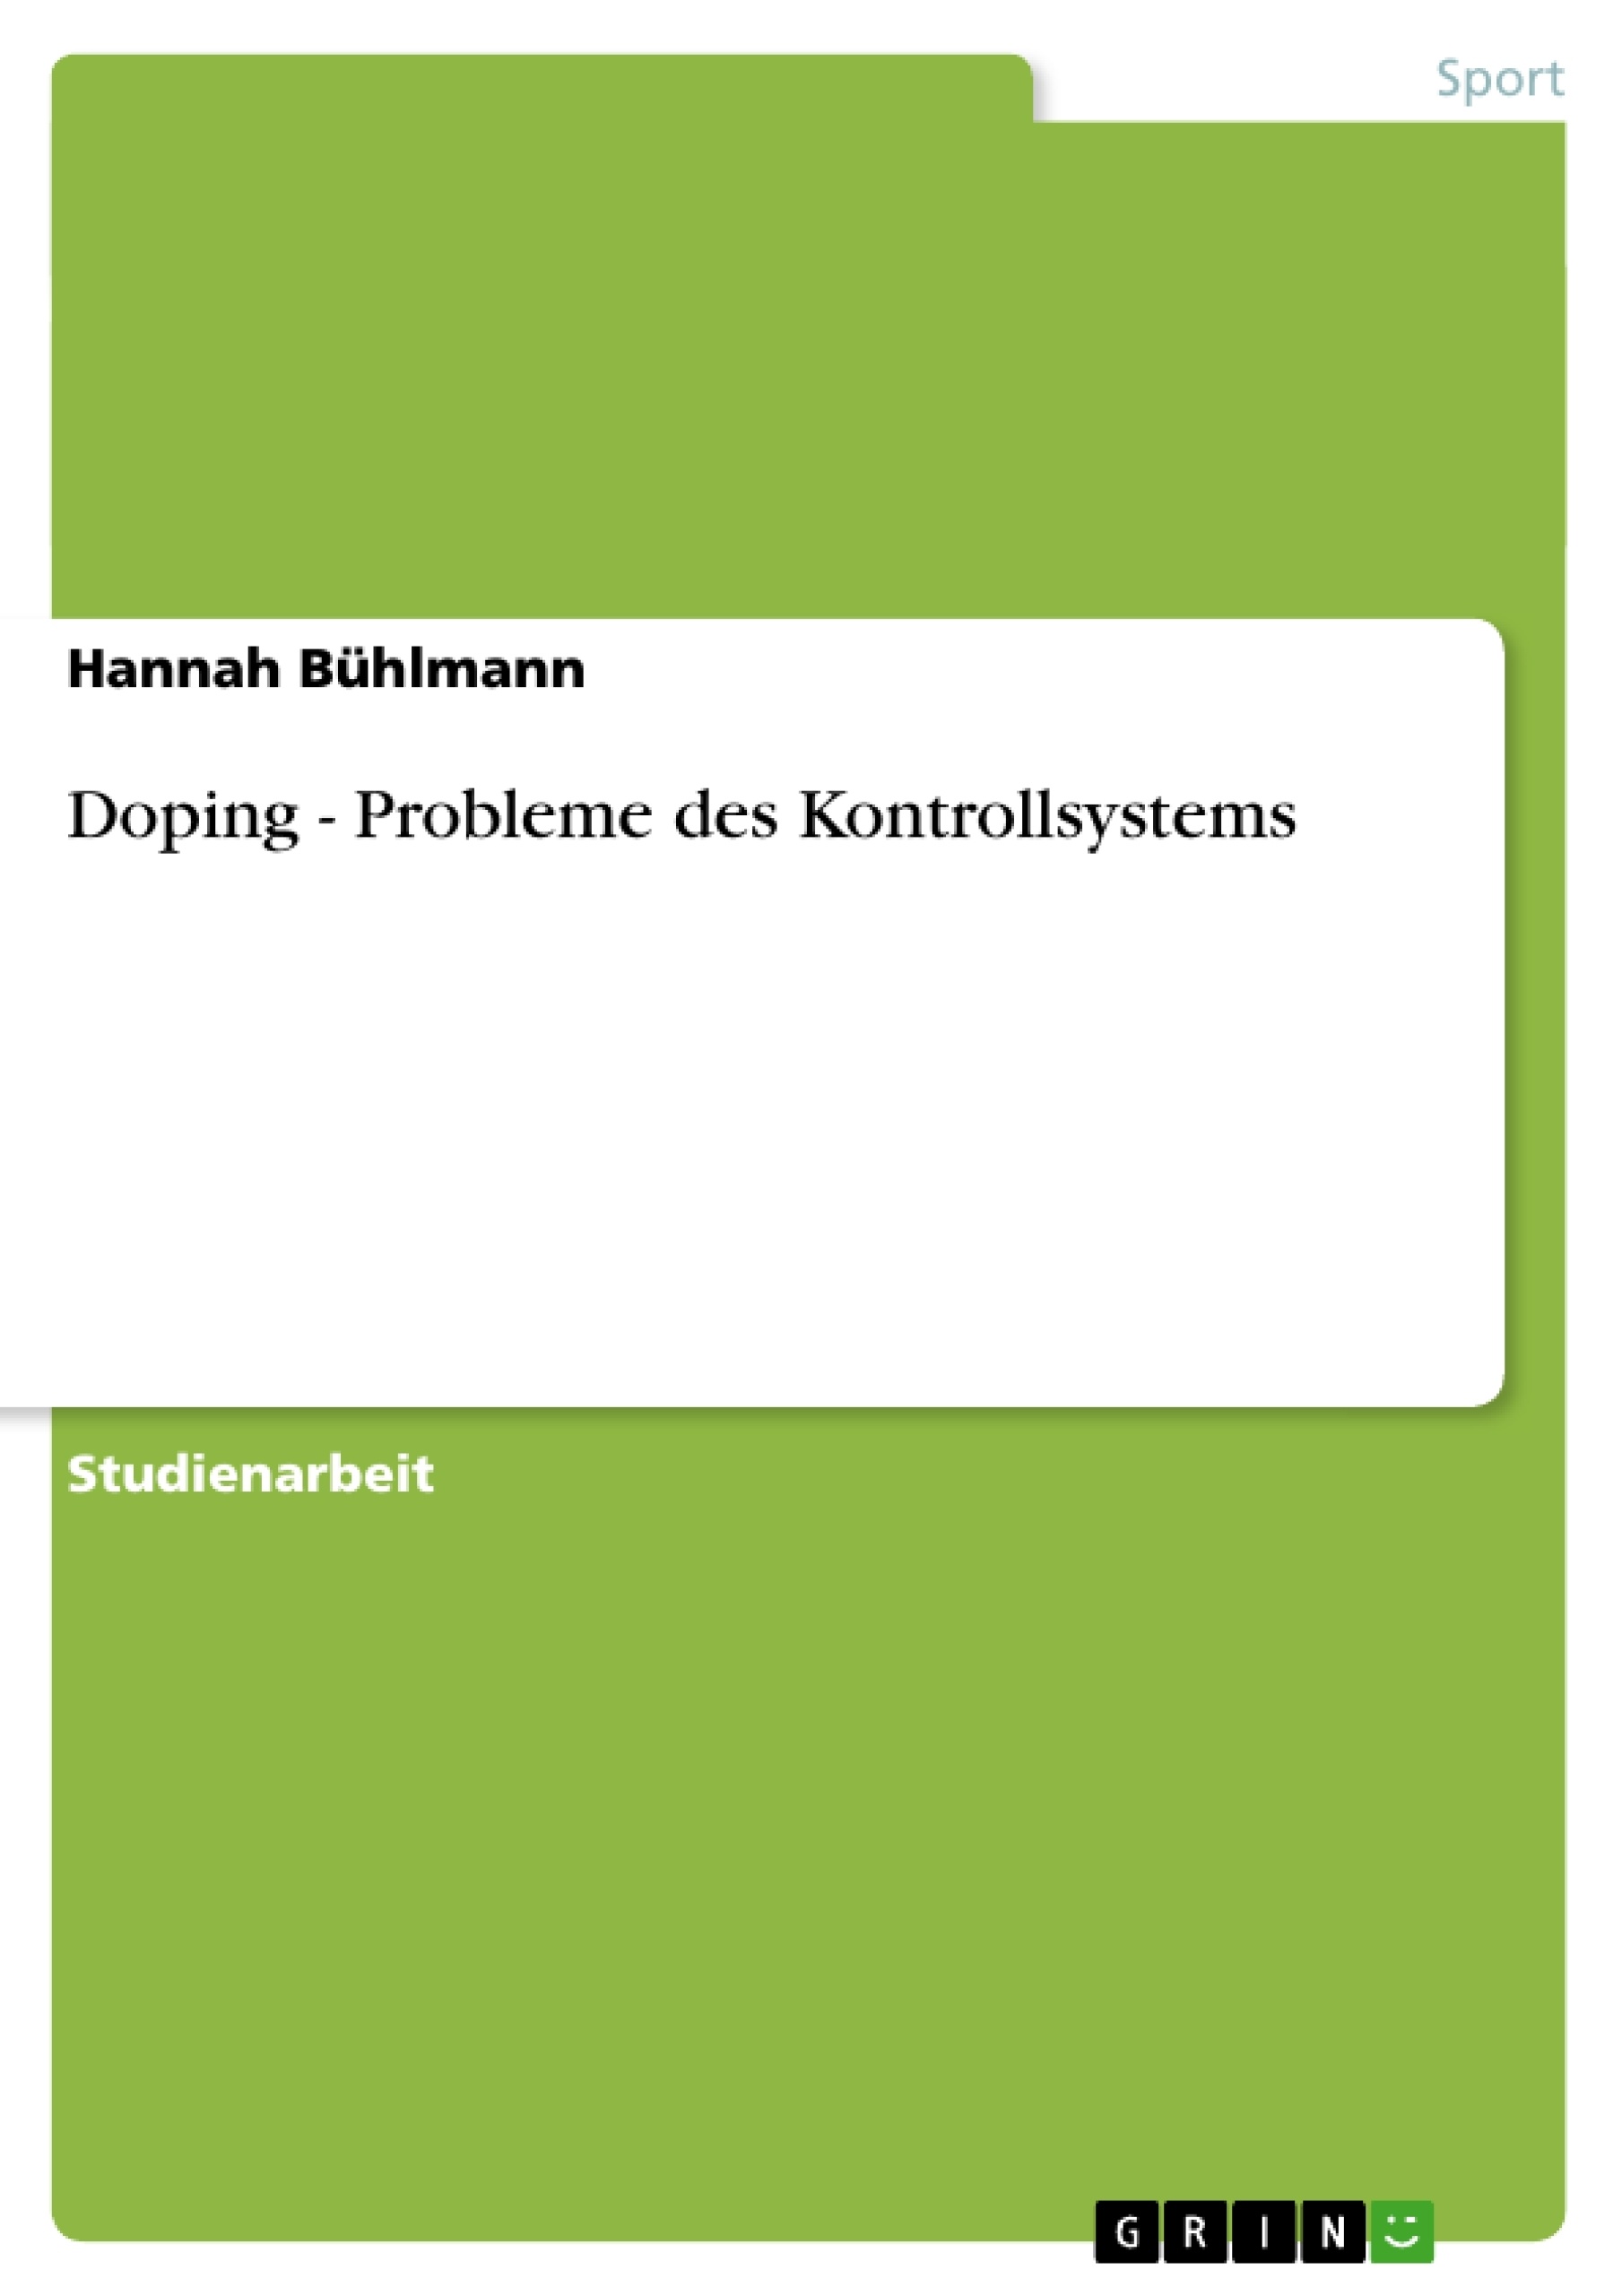 Title: Doping - Probleme des Kontrollsystems